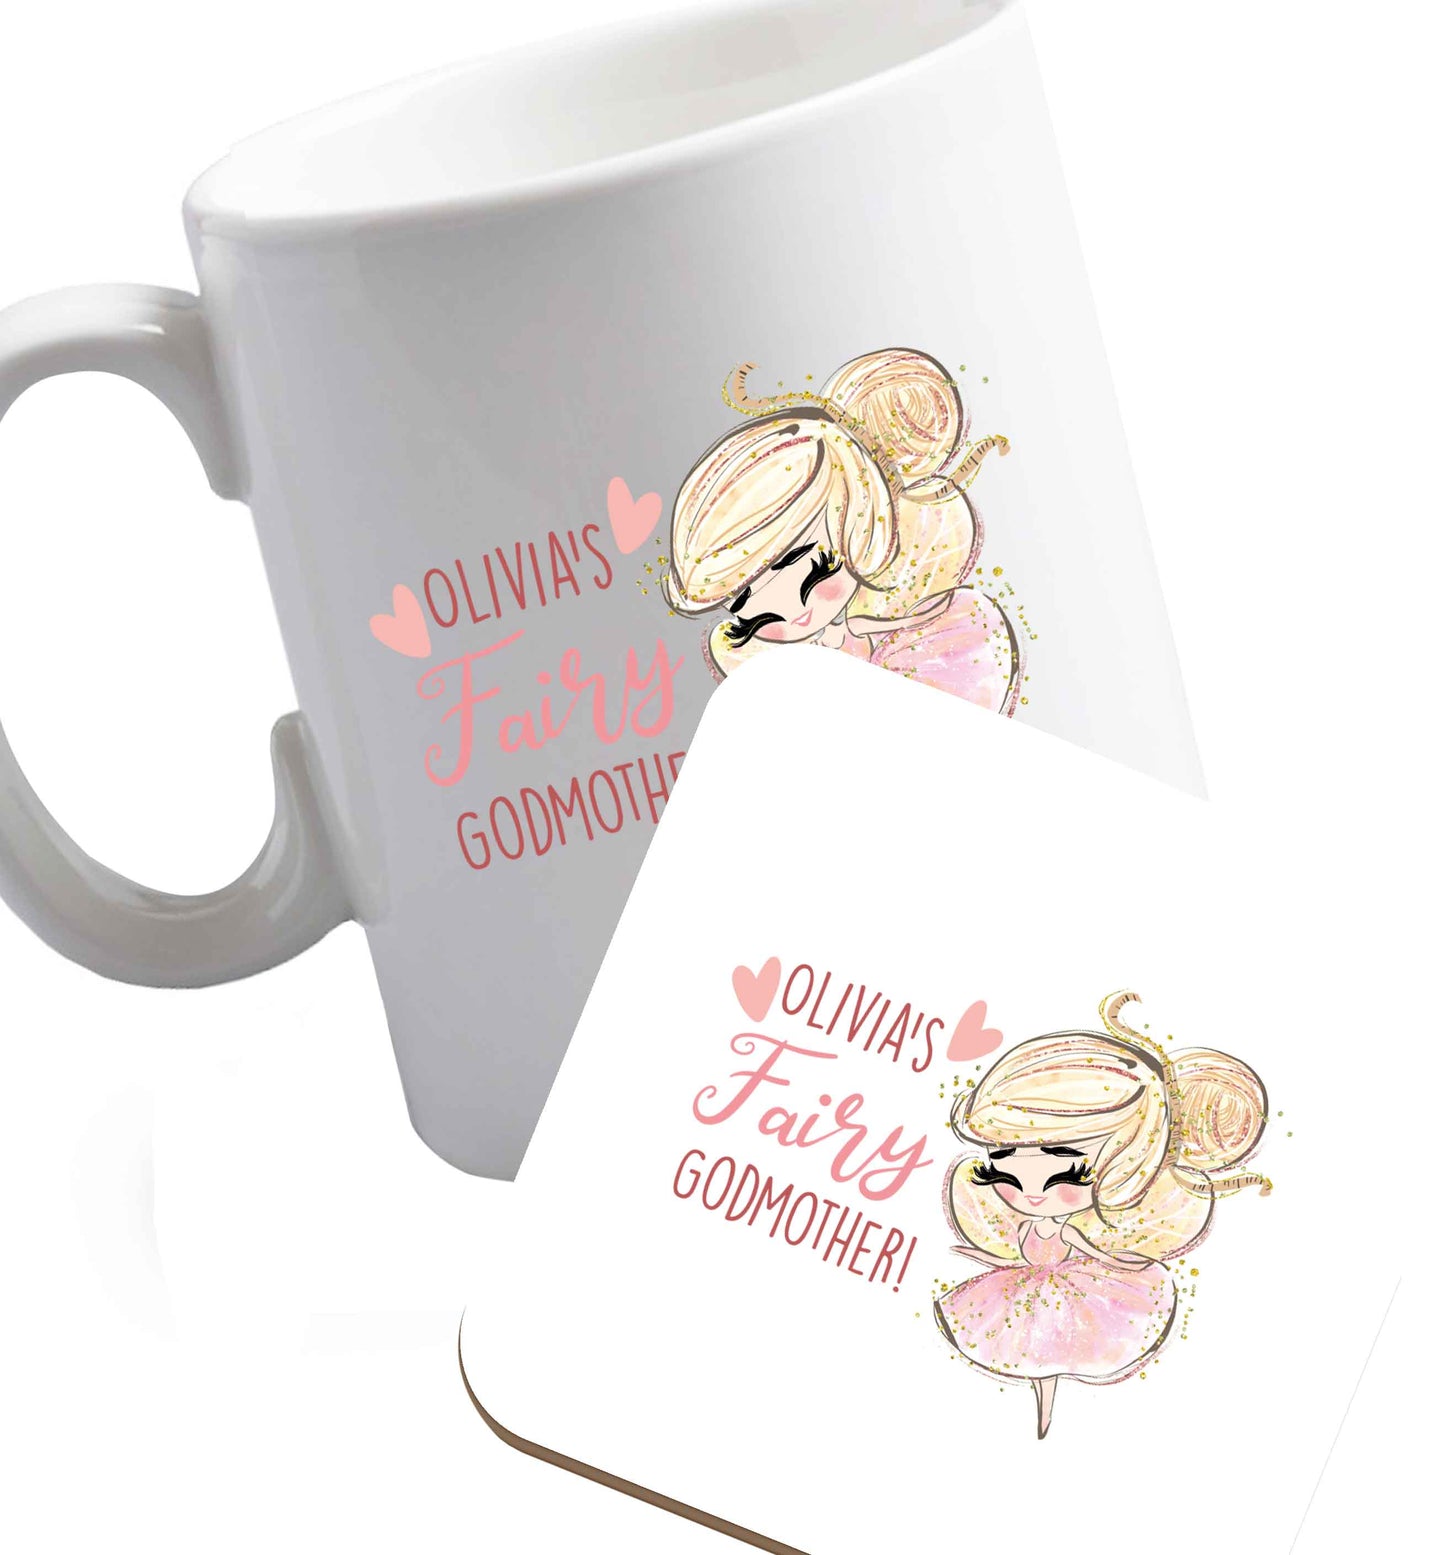 10 oz Personalised fairy Godmother - blonde hair  ceramic mug and coaster set right handed